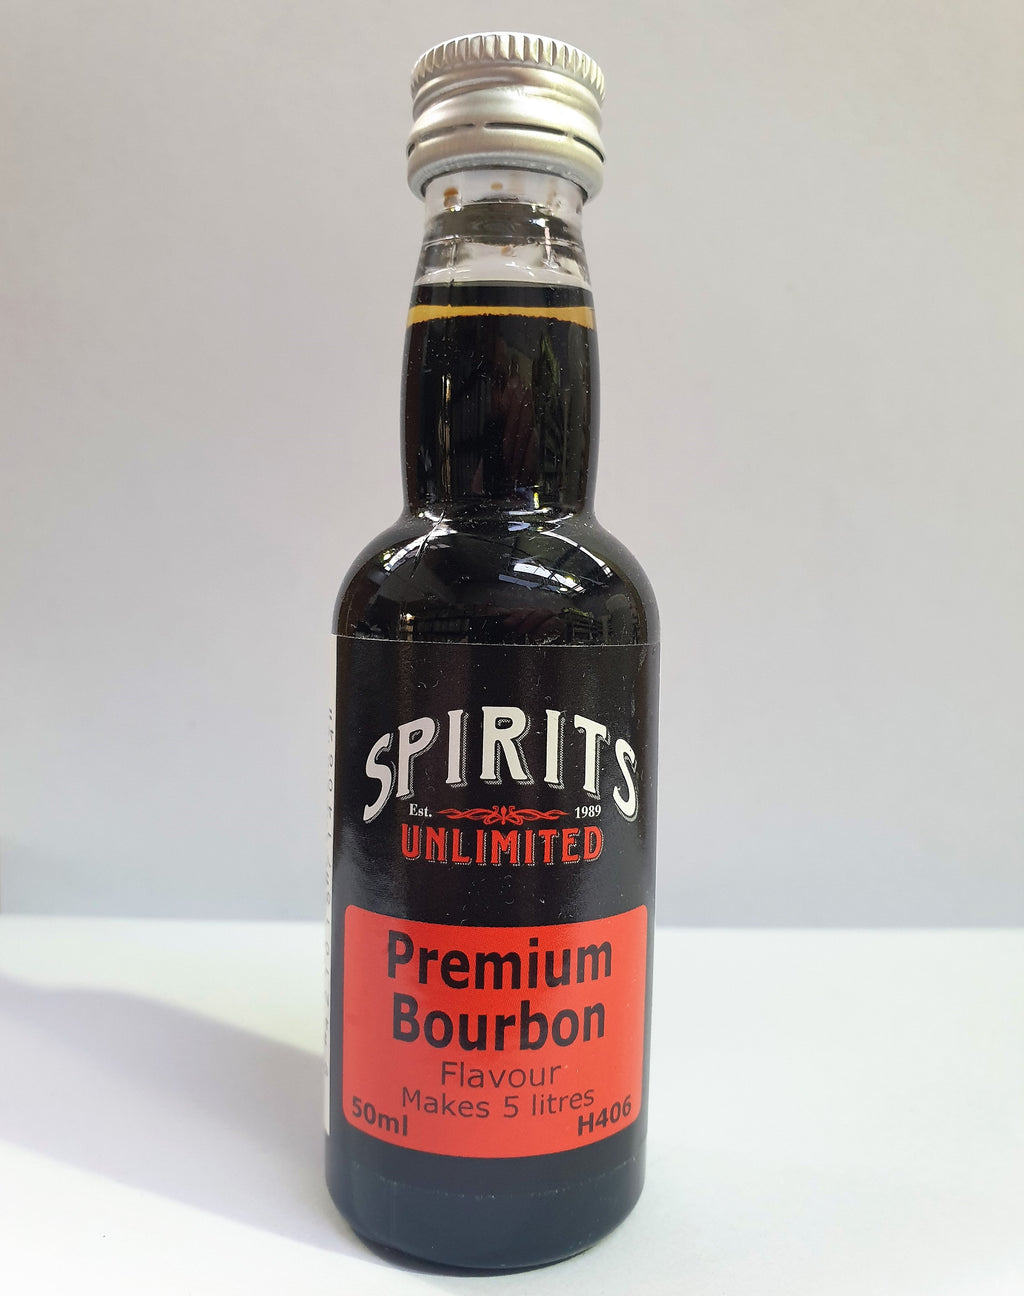 Spirits Unlimited Premium Bourbon (H406)